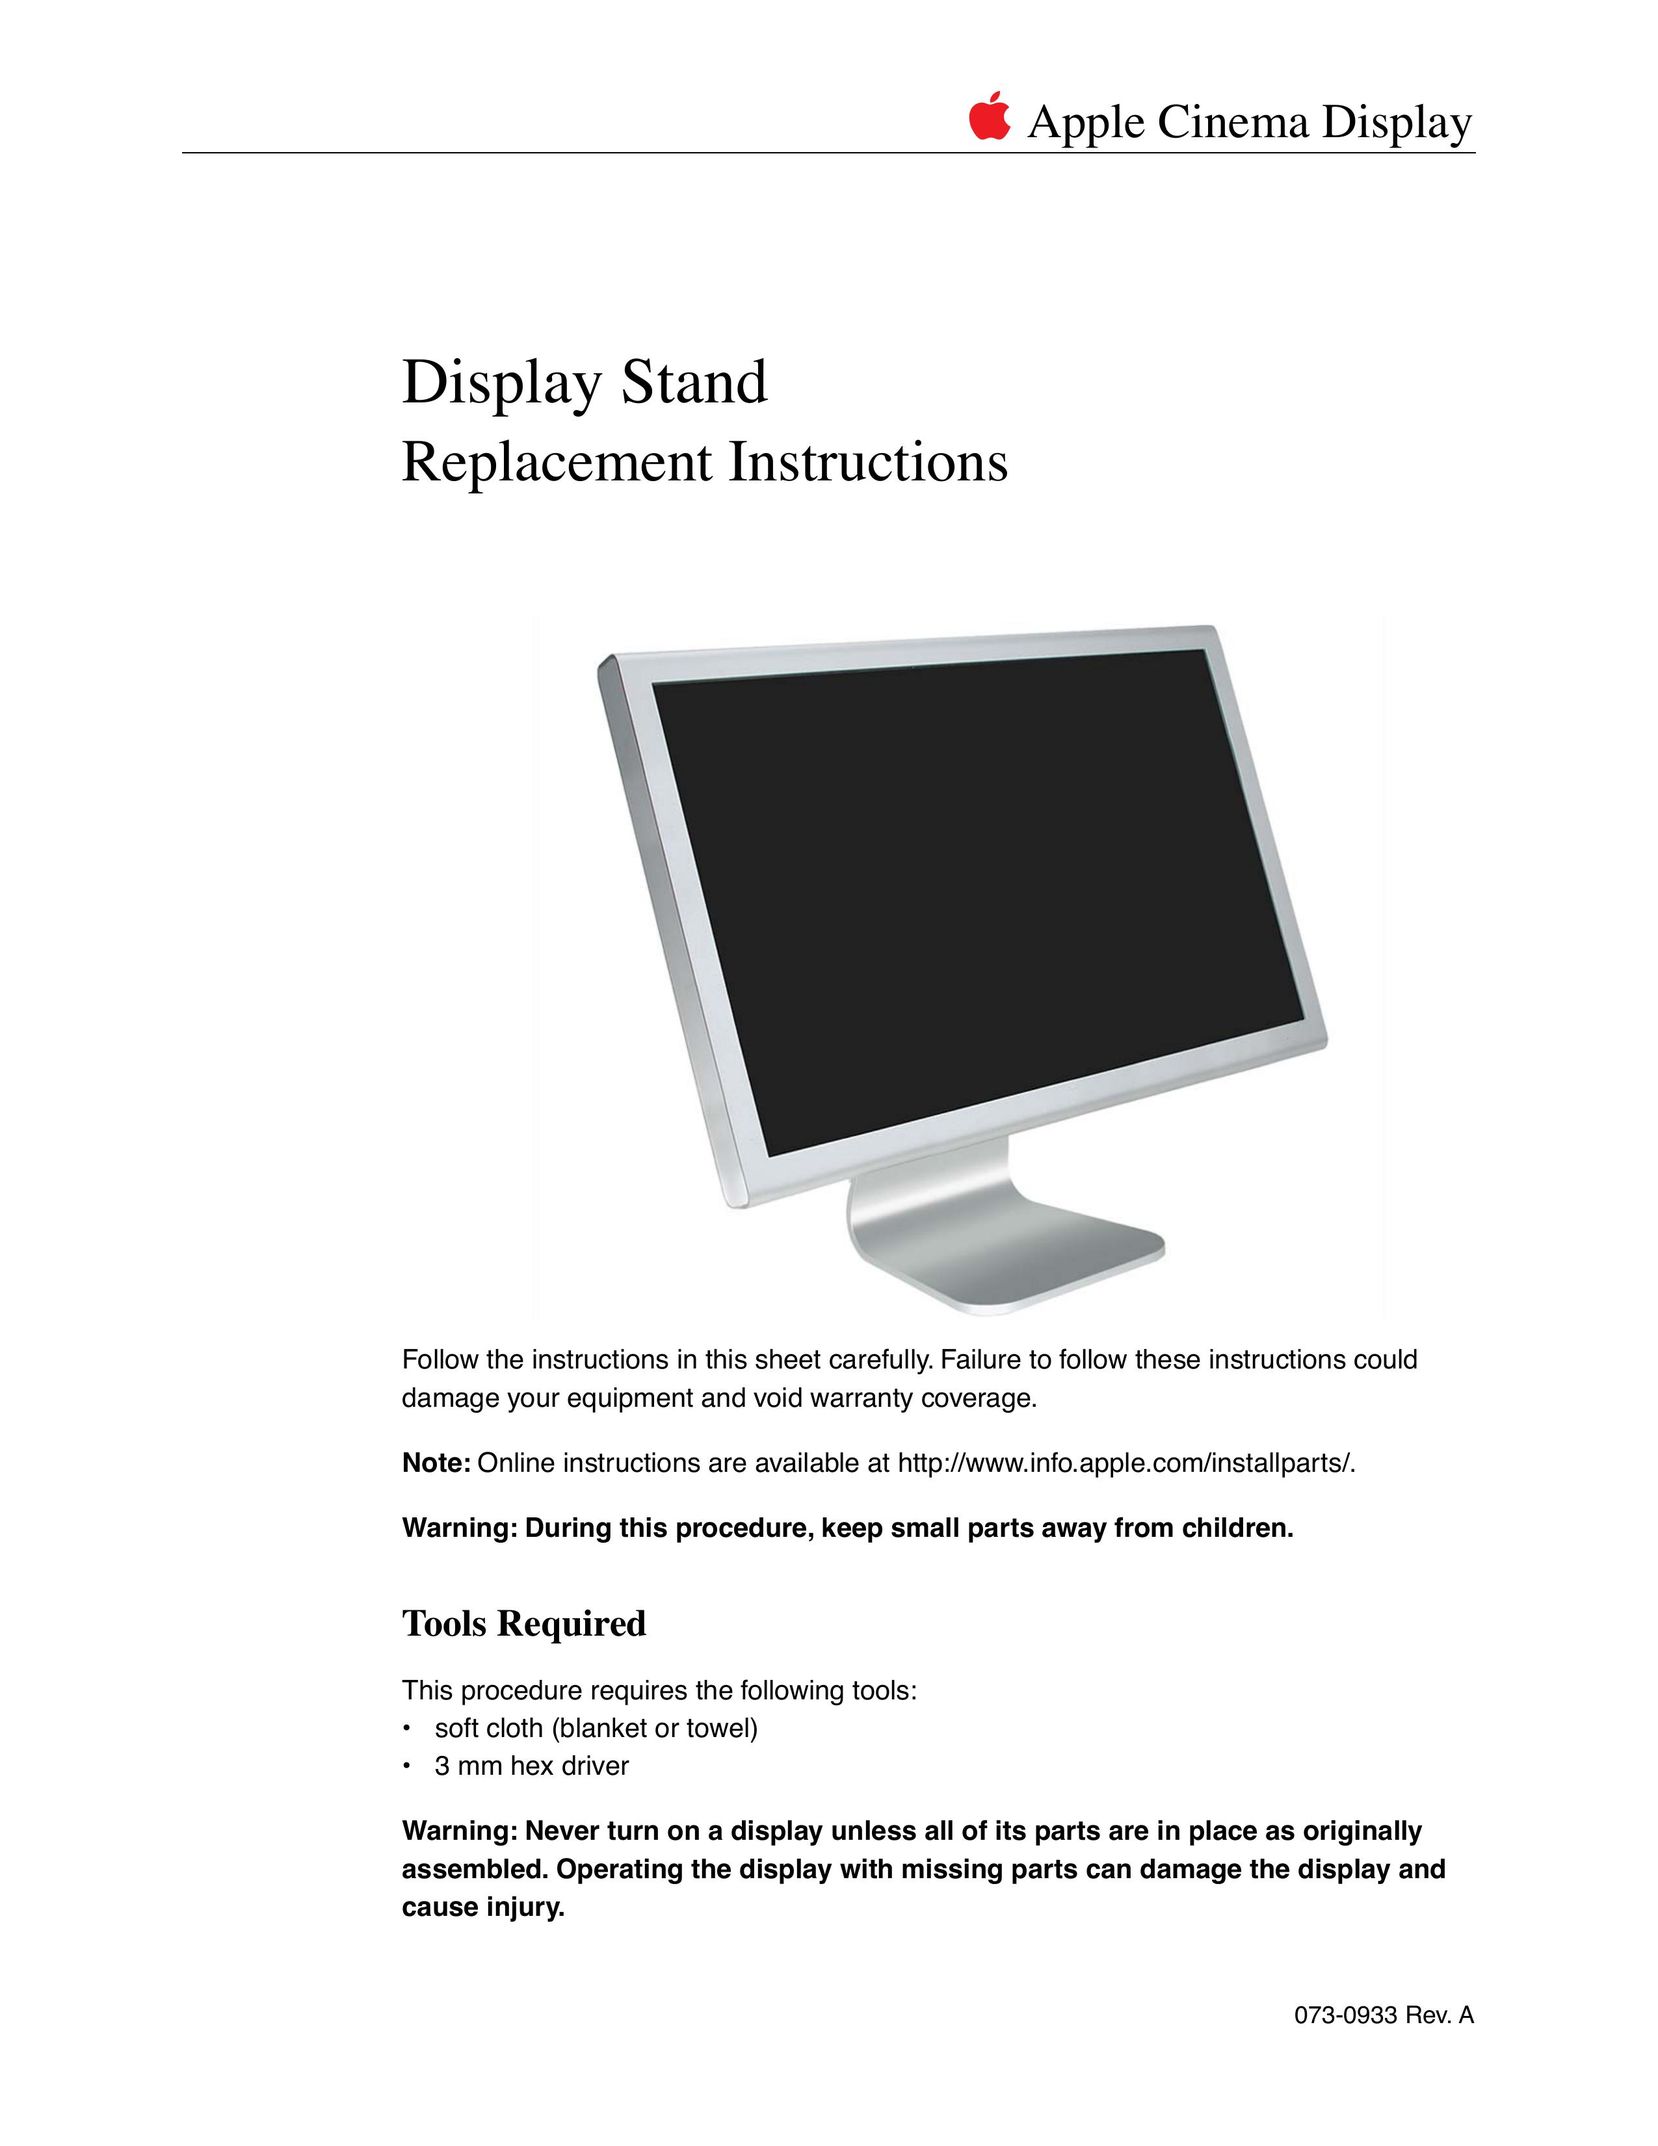 Apple Display Stand Indoor Furnishings User Manual